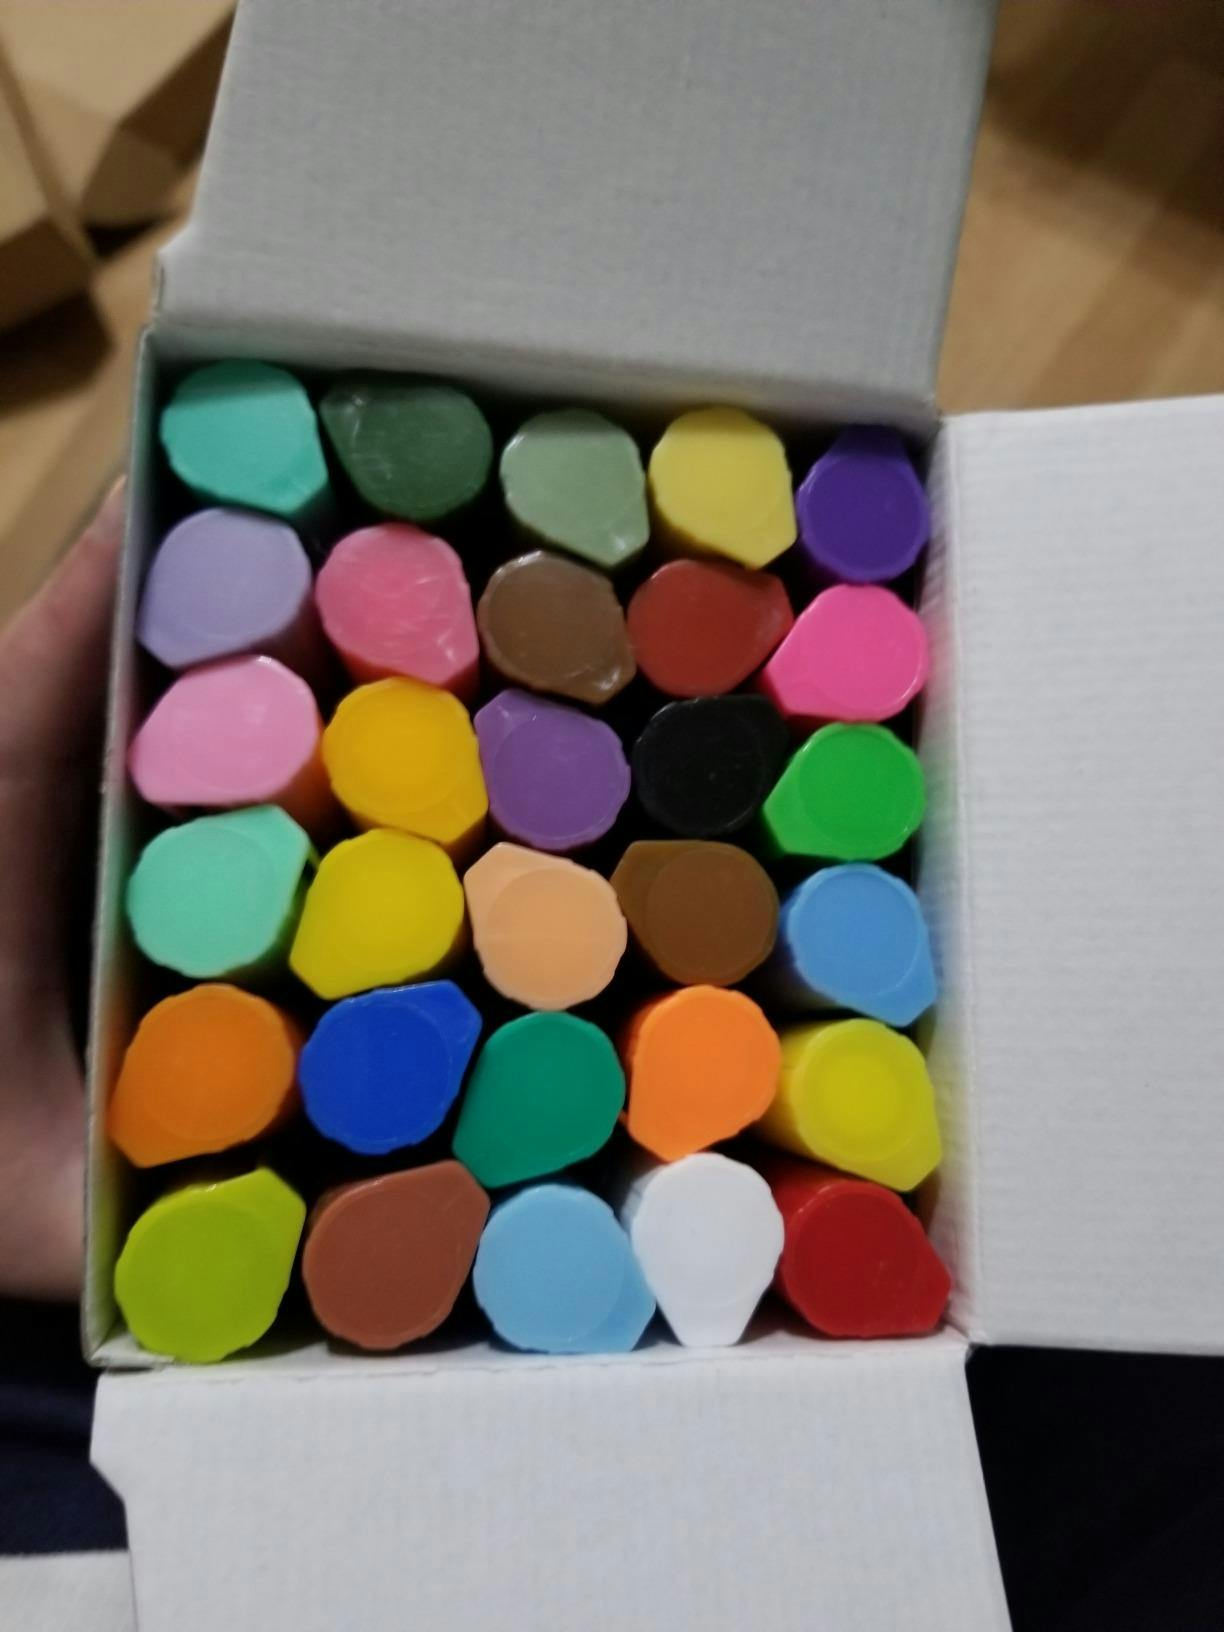 Extra Fine Tip Liquid Chalk Markers (30 Pack 1mm) Pastel + Neon Chalk Pens  - Erasable Dry Erase Marker for Chalkboard, Blackboards, Window, Bistro